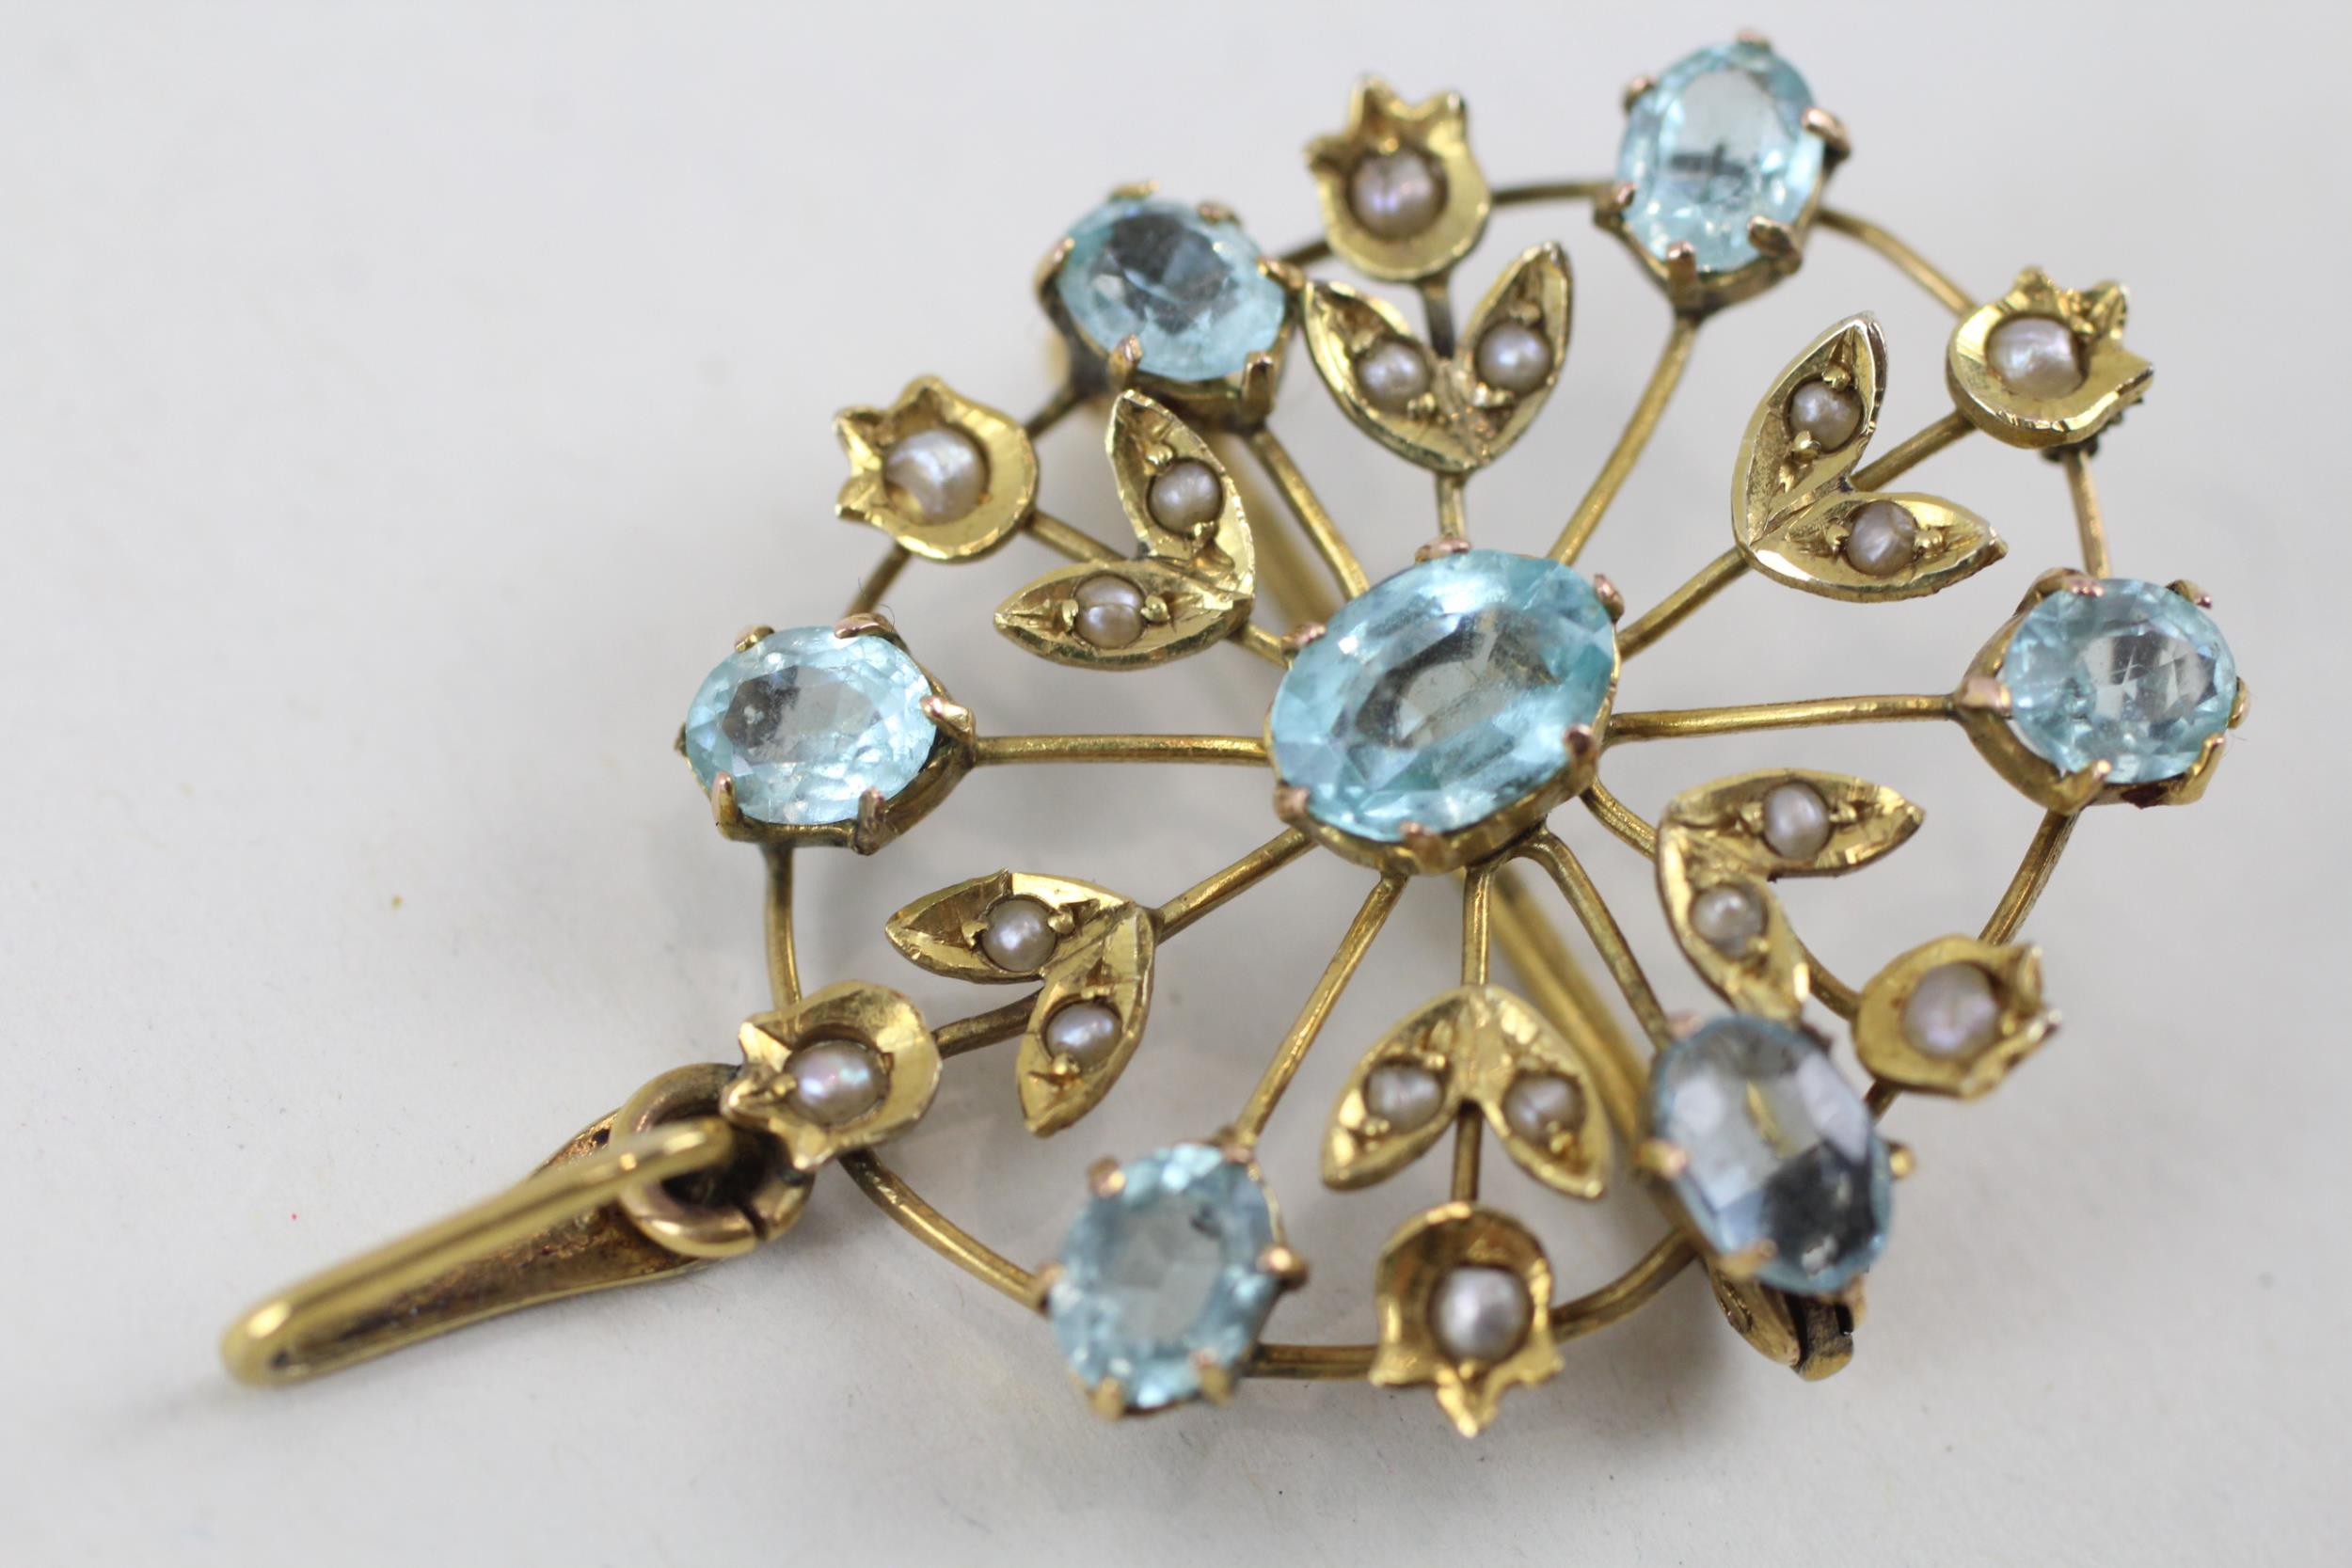 9ct gold Edwardian aquamarine x1, aquamarine paste & seed pearl foliate motif pendant brooch (4g) - Image 2 of 6